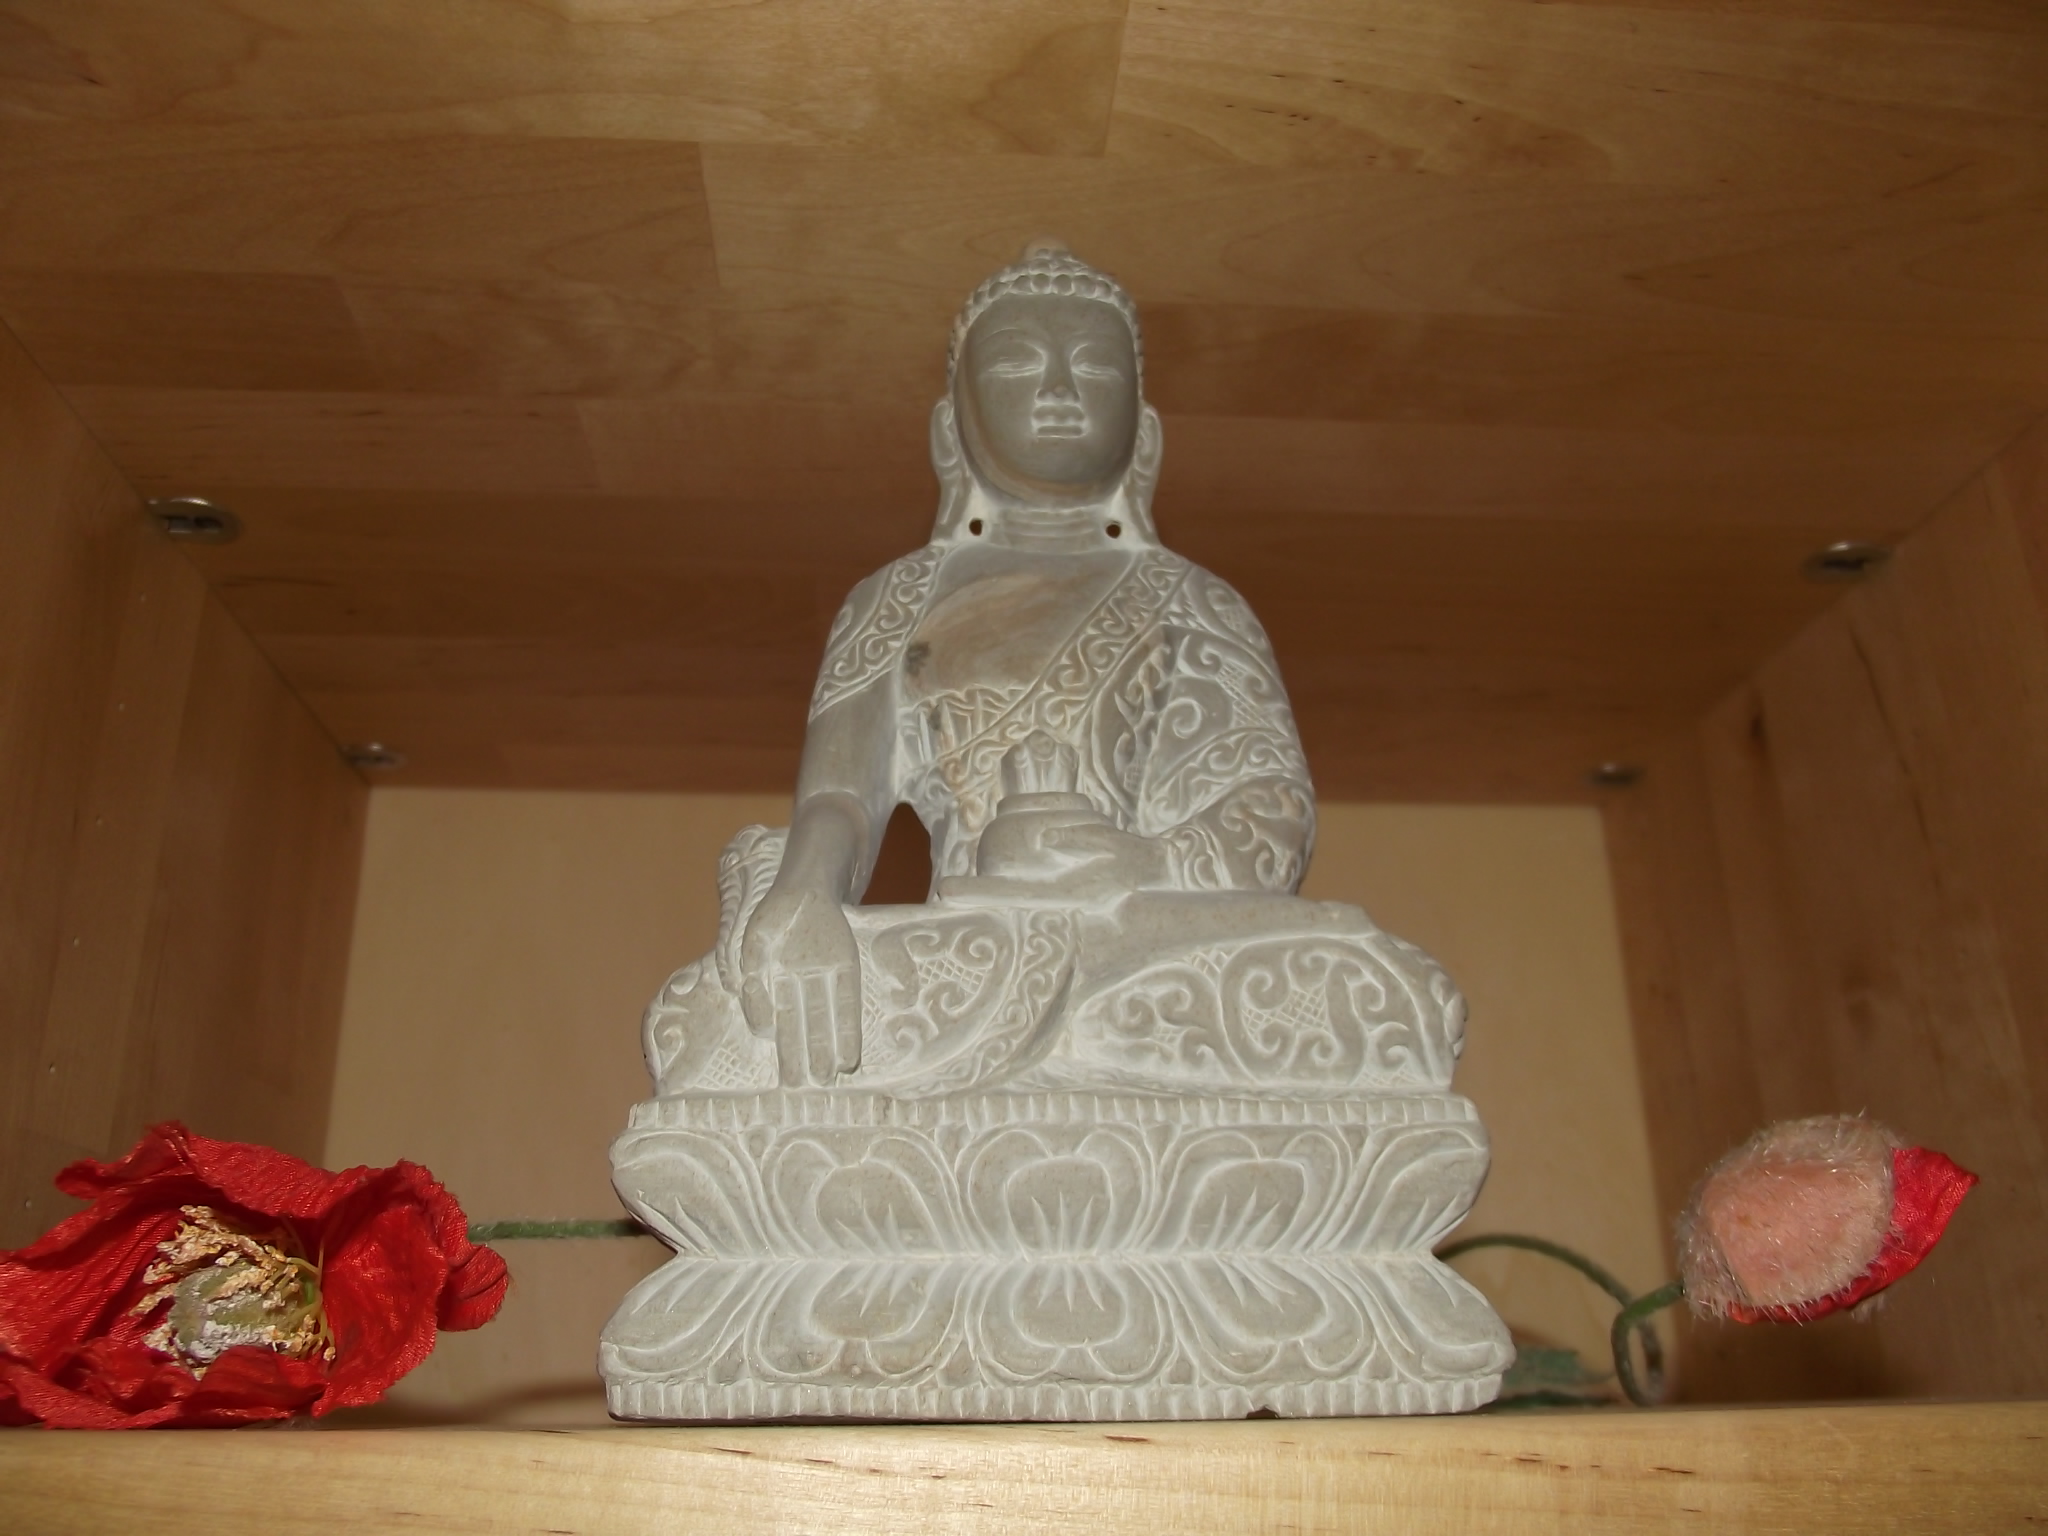 Der Buddha von Frau Ingrid Burmeister - Ritterhude an seinem Platz im Regal - Ommmmmhhhh